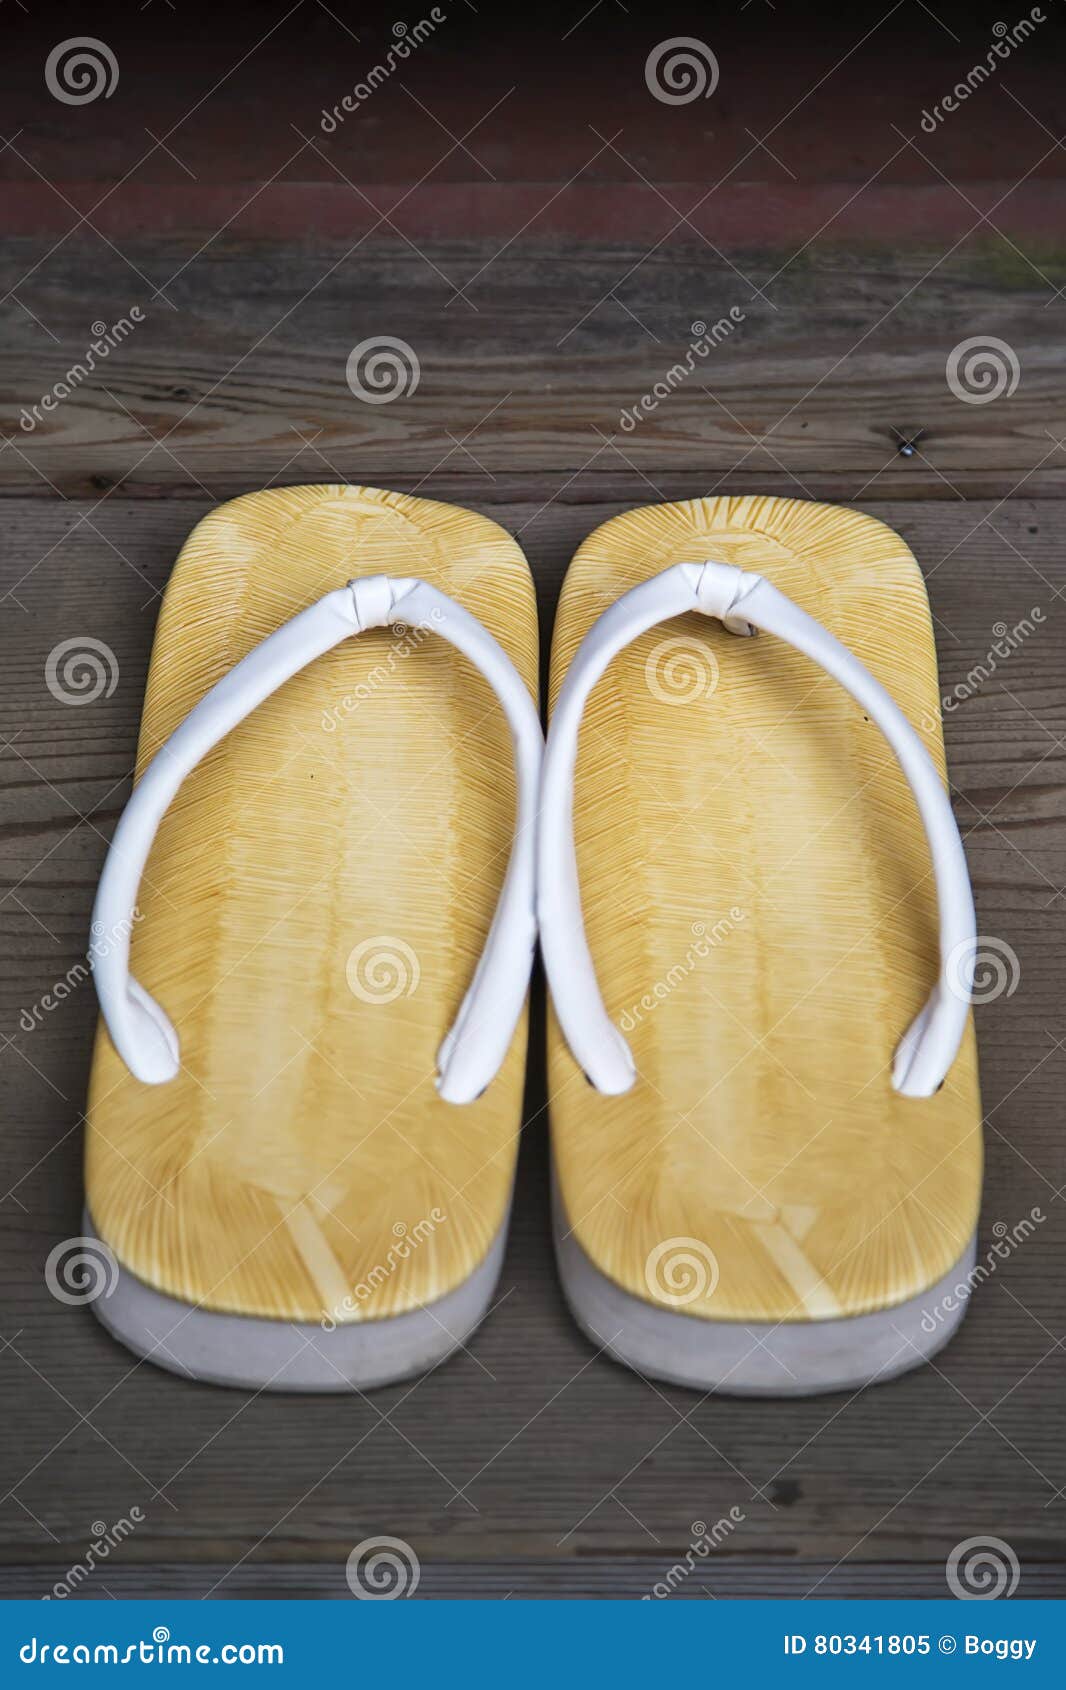 Japanese sandal stock image. Image of shoe, wood, pair - 80341805